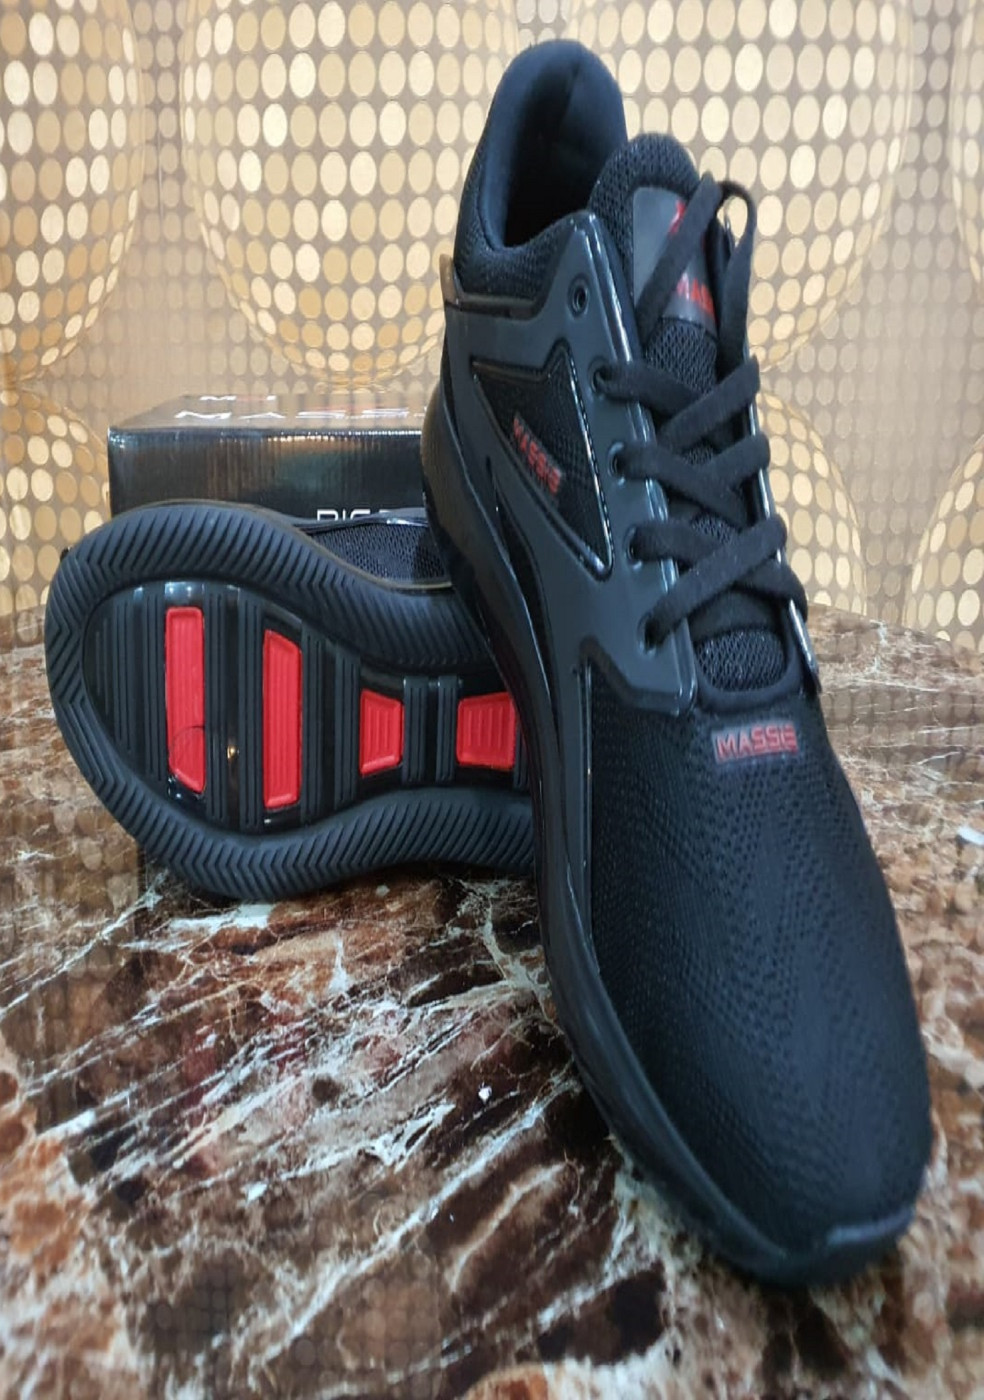 MASSIE Stylish Black Sports Shoes For Men